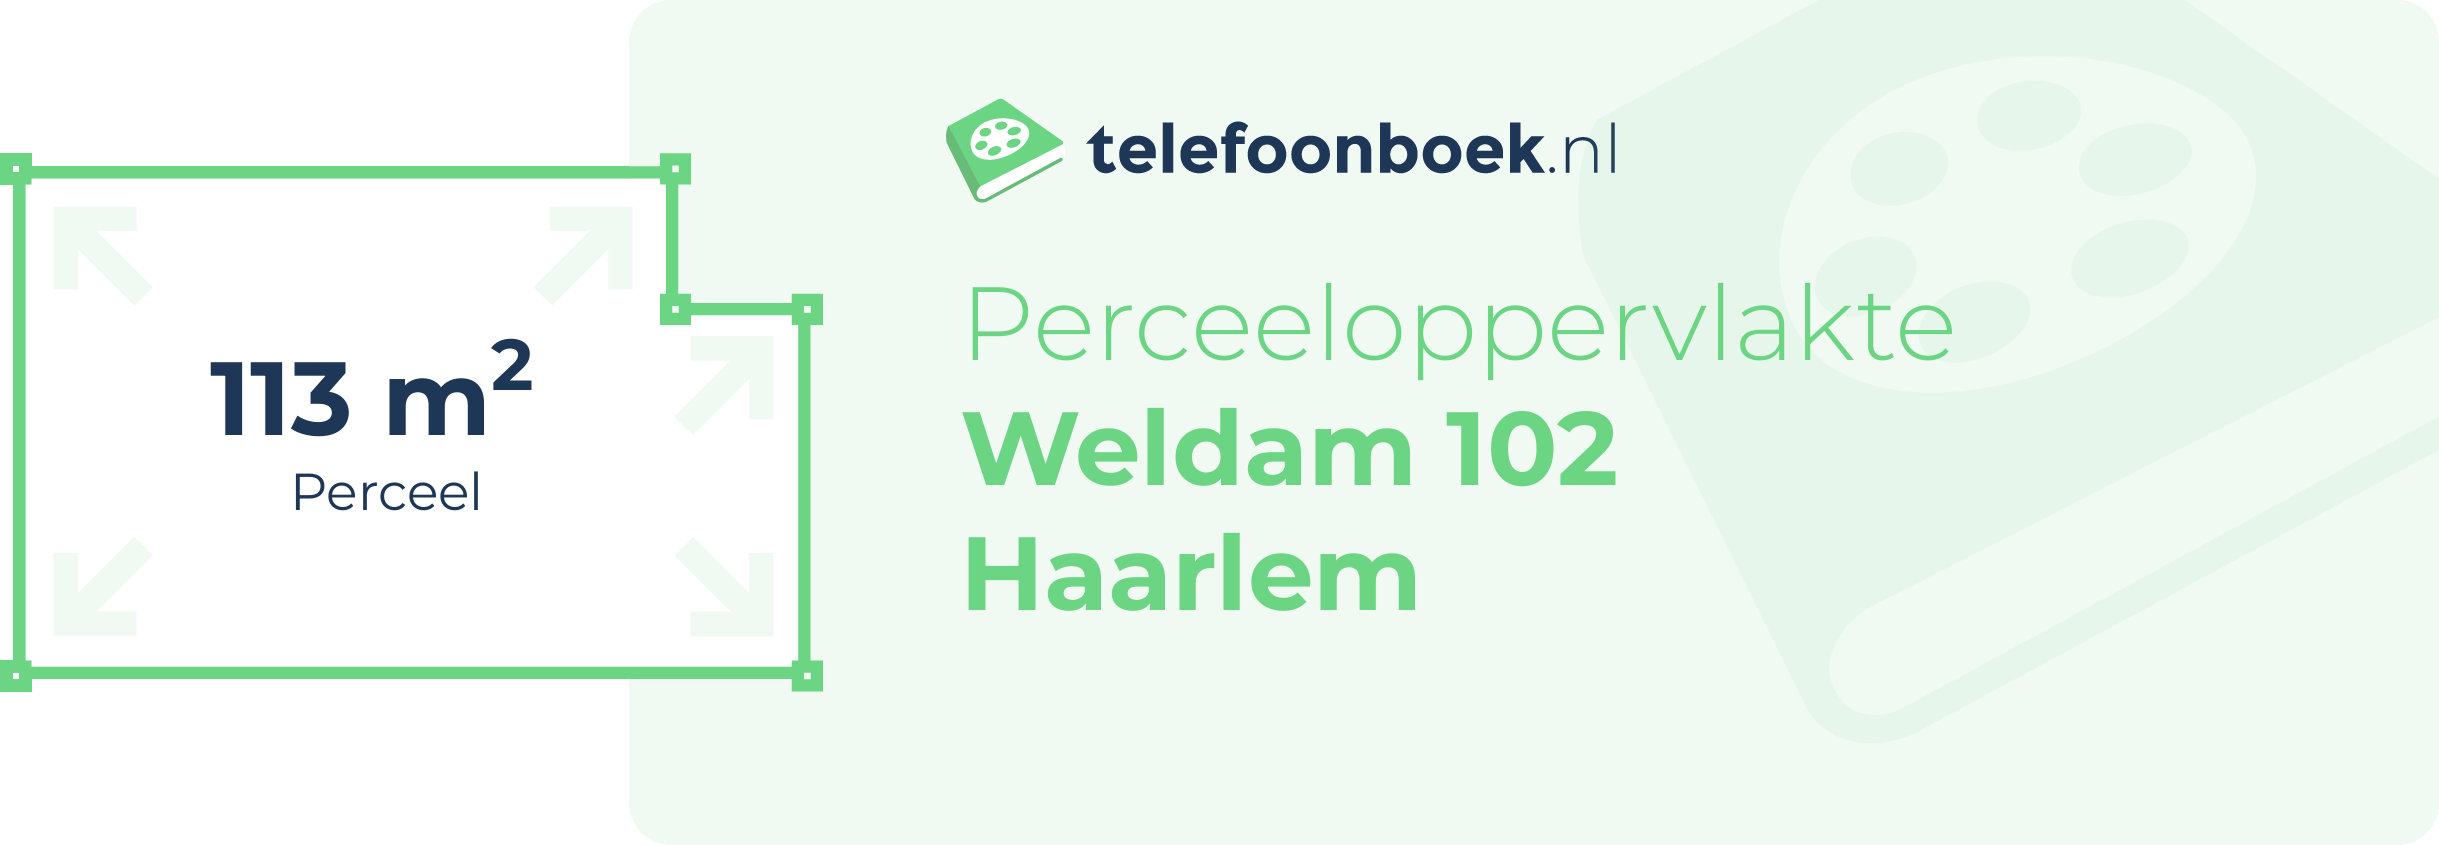 Perceeloppervlakte Weldam 102 Haarlem